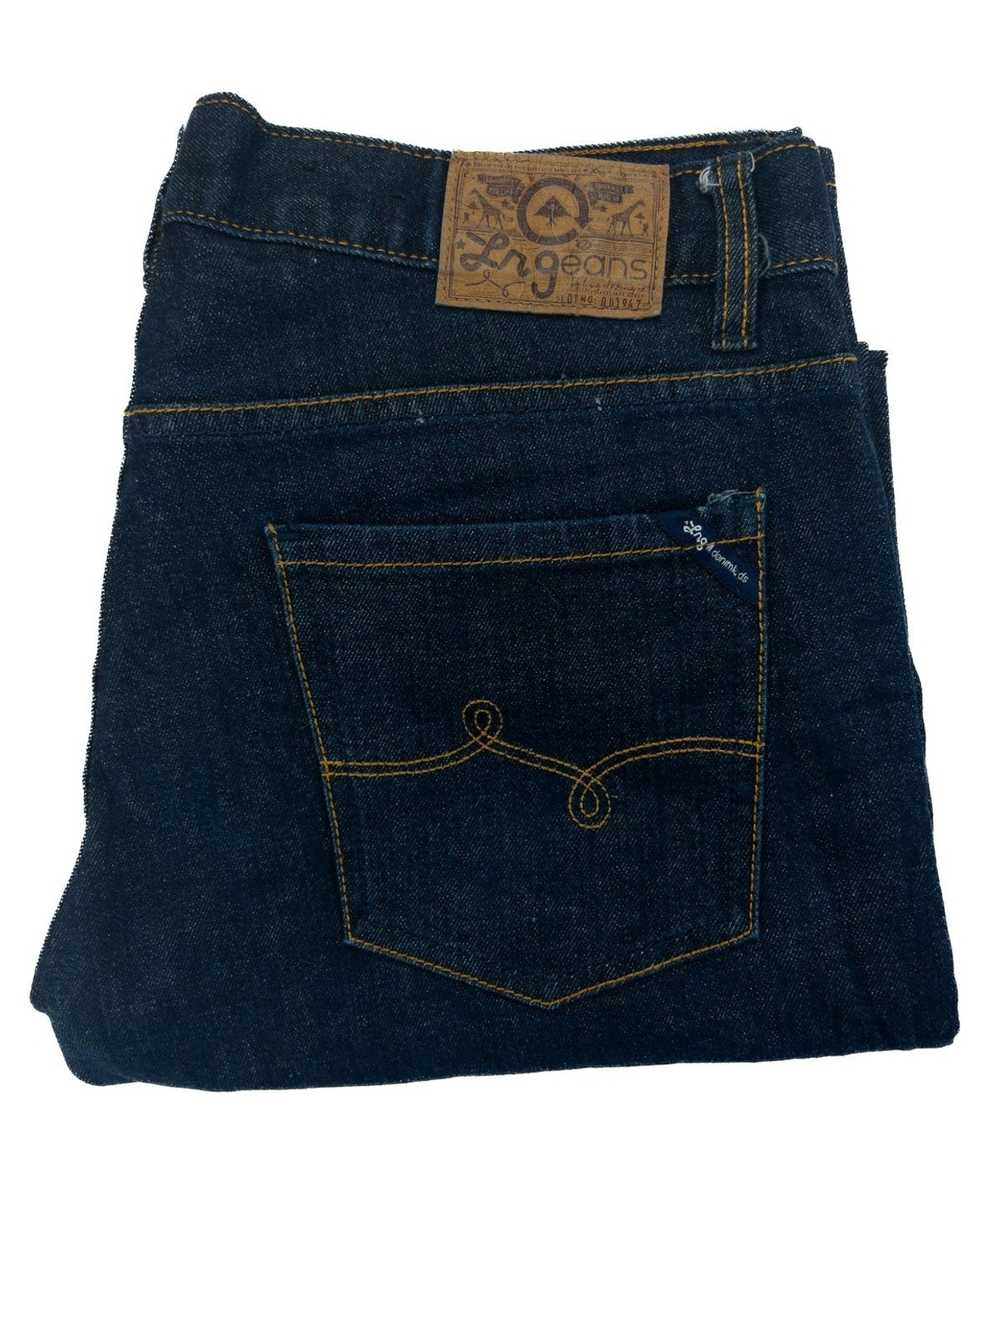 LRG LRG Jeans straight fit dark blue denim jeans … - image 9